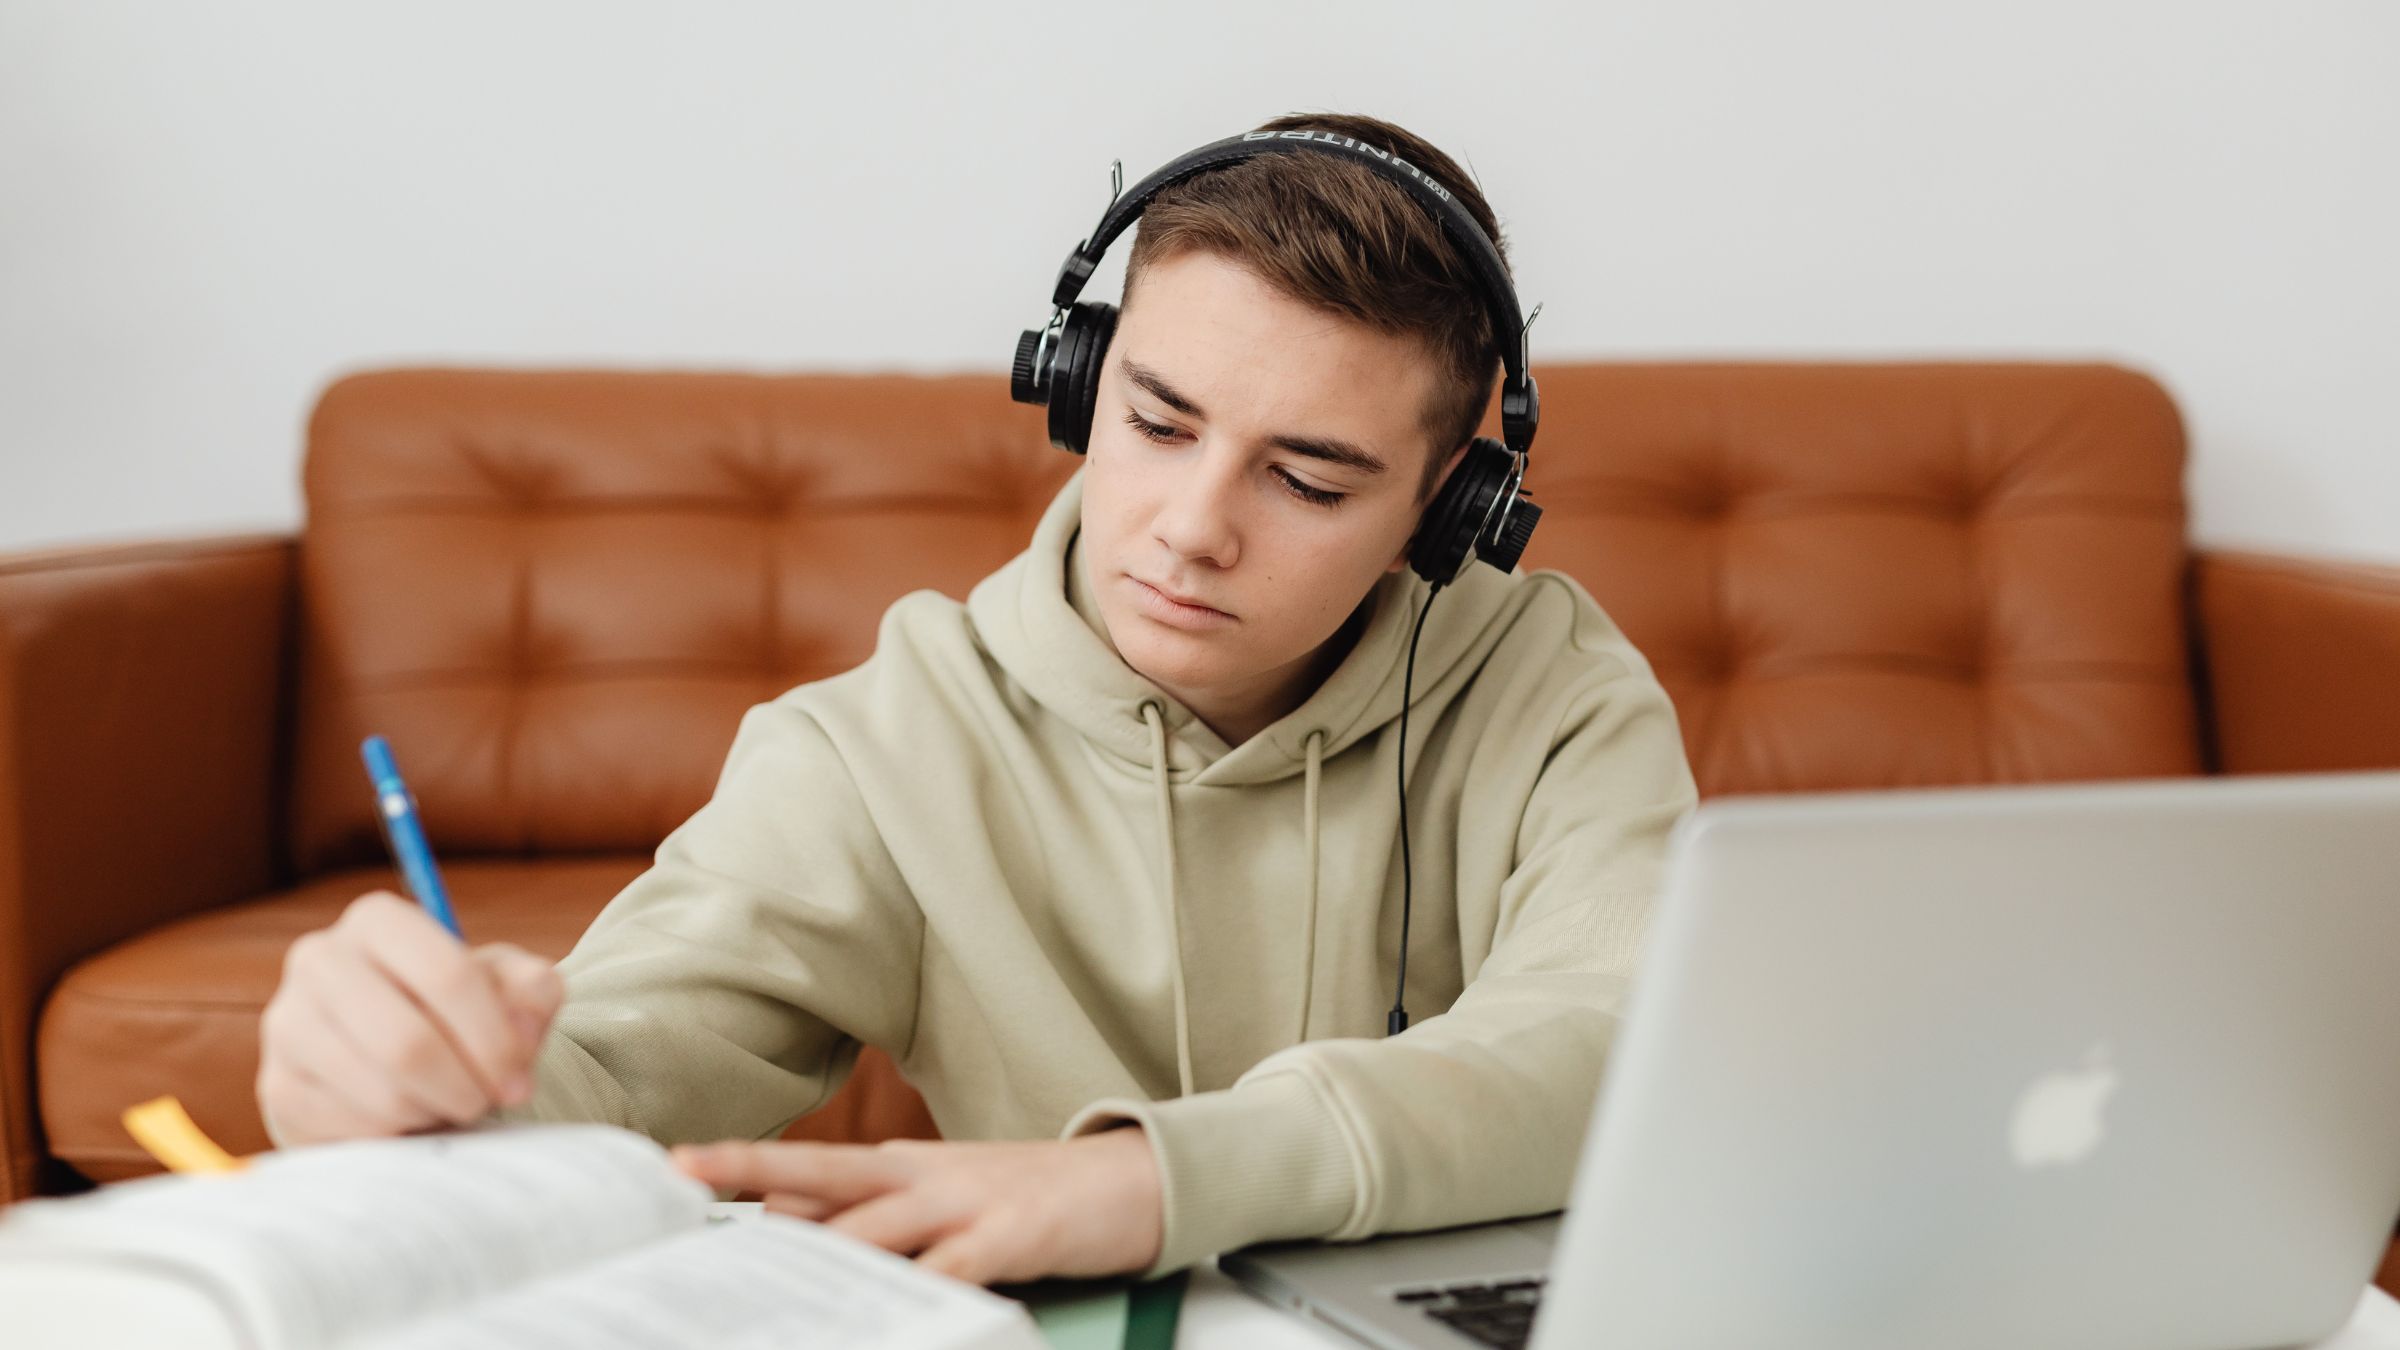 Solutions listening. Музыка для работы и учебы. Listening 4k. Спокойная музыка для учебы. A student Listening to a Song.